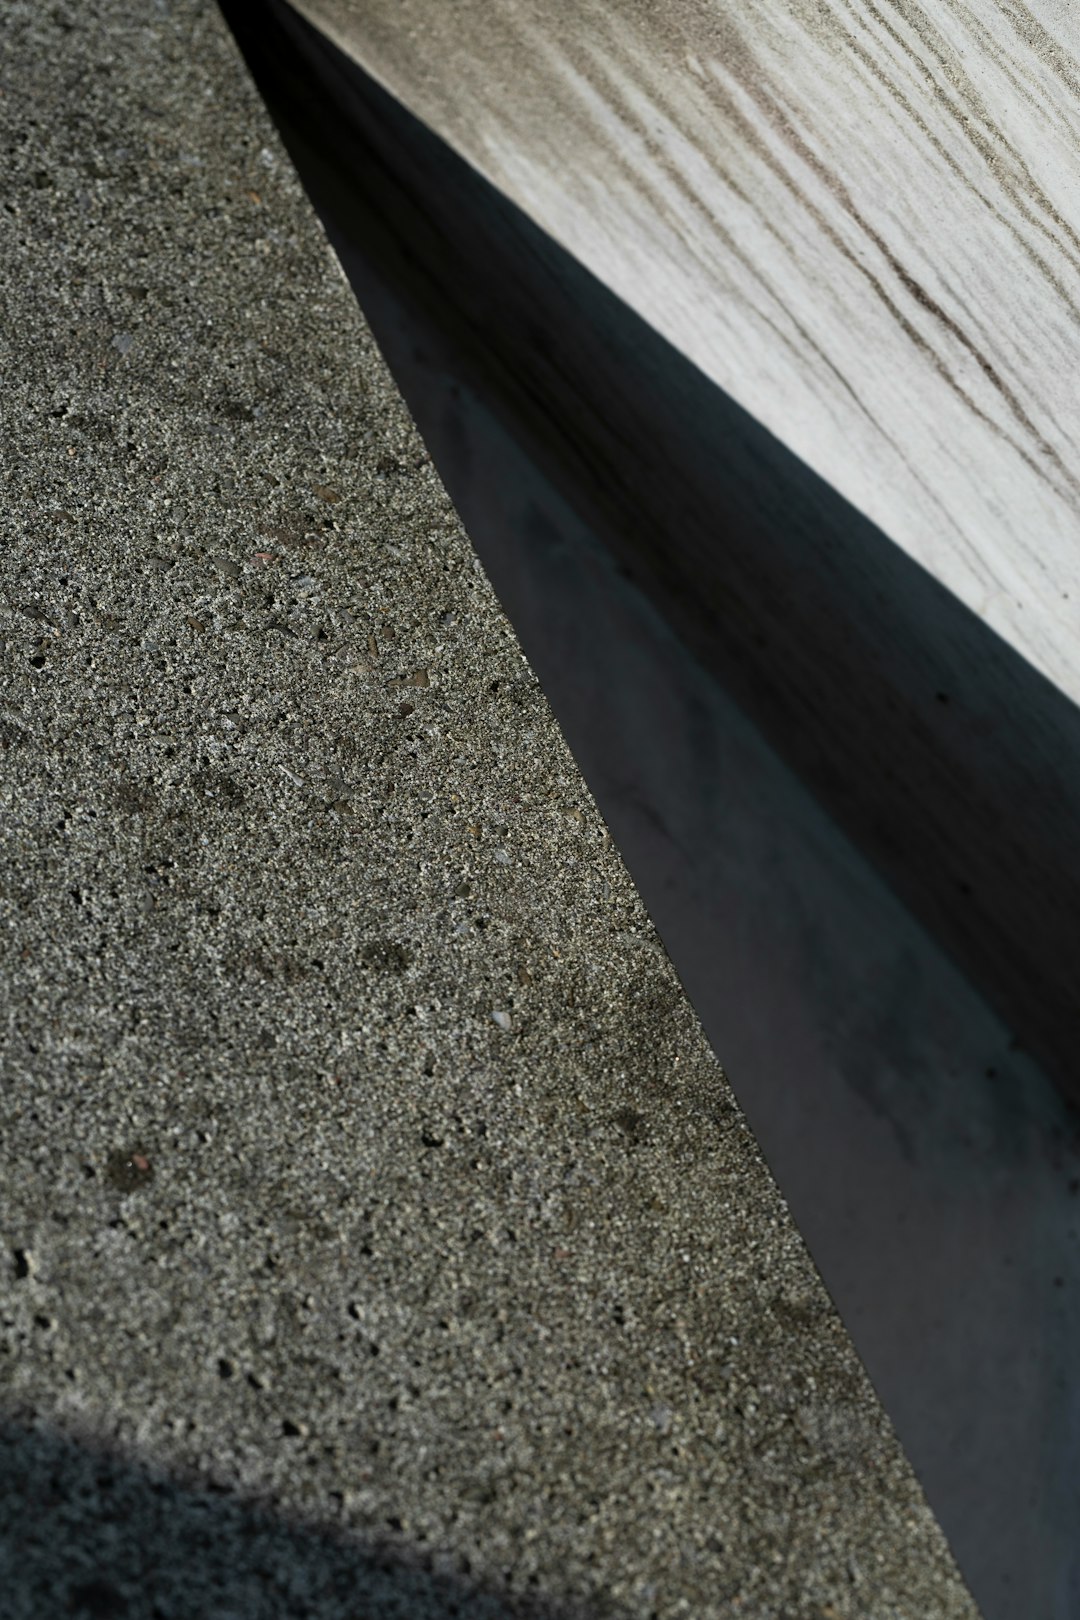 white wooden plank on gray concrete floor